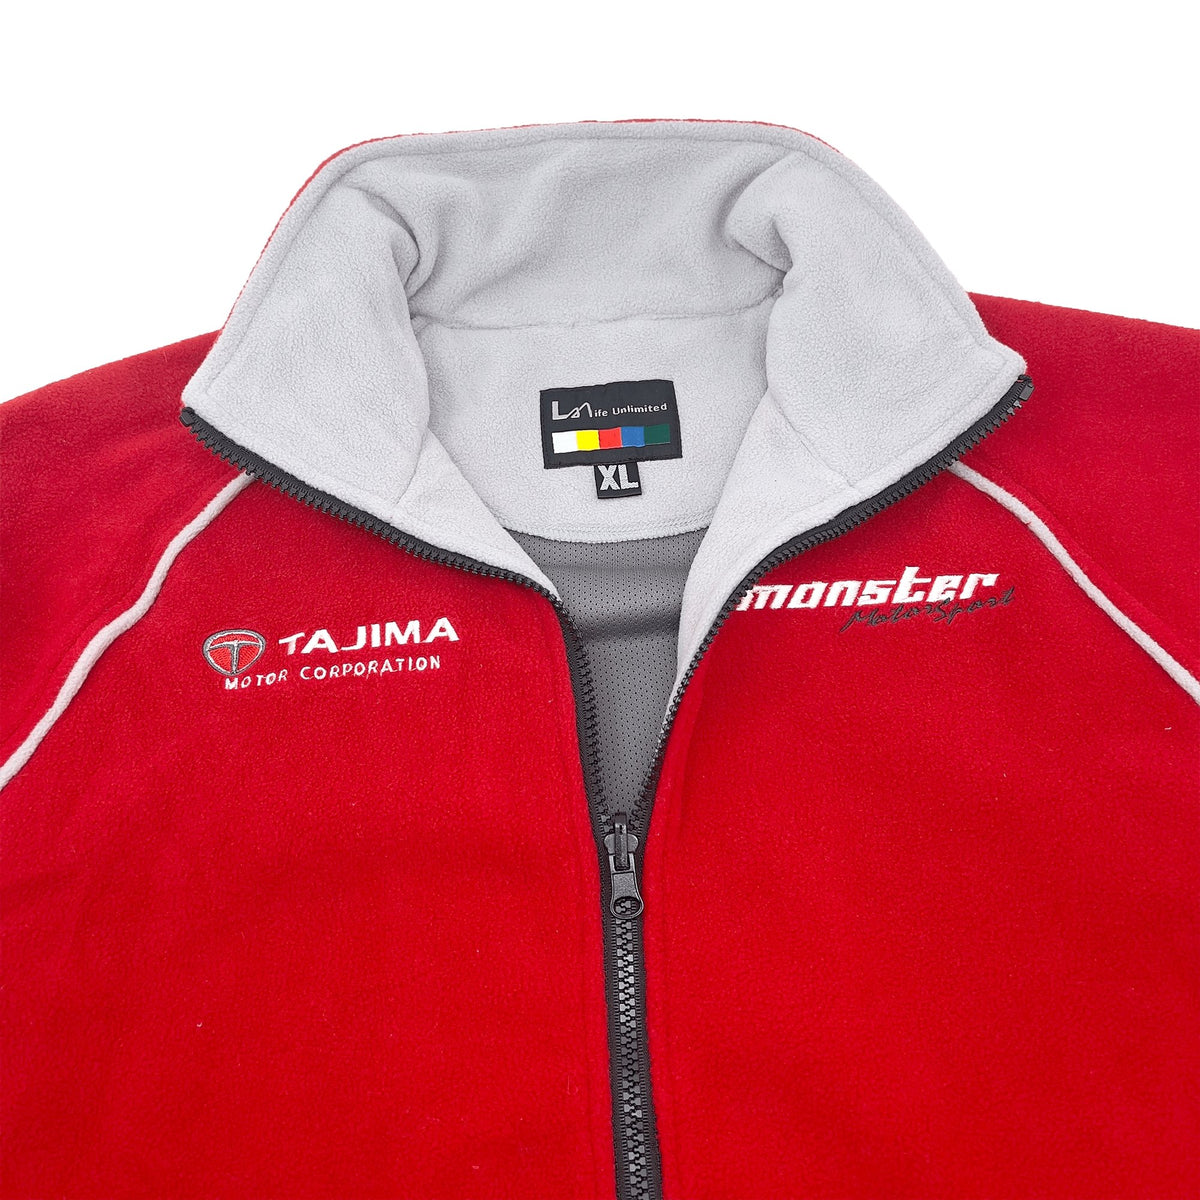 Retro JDM Japan Tajima Corporation Monster Sport Fleece Jacket Red - Sugoi JDM